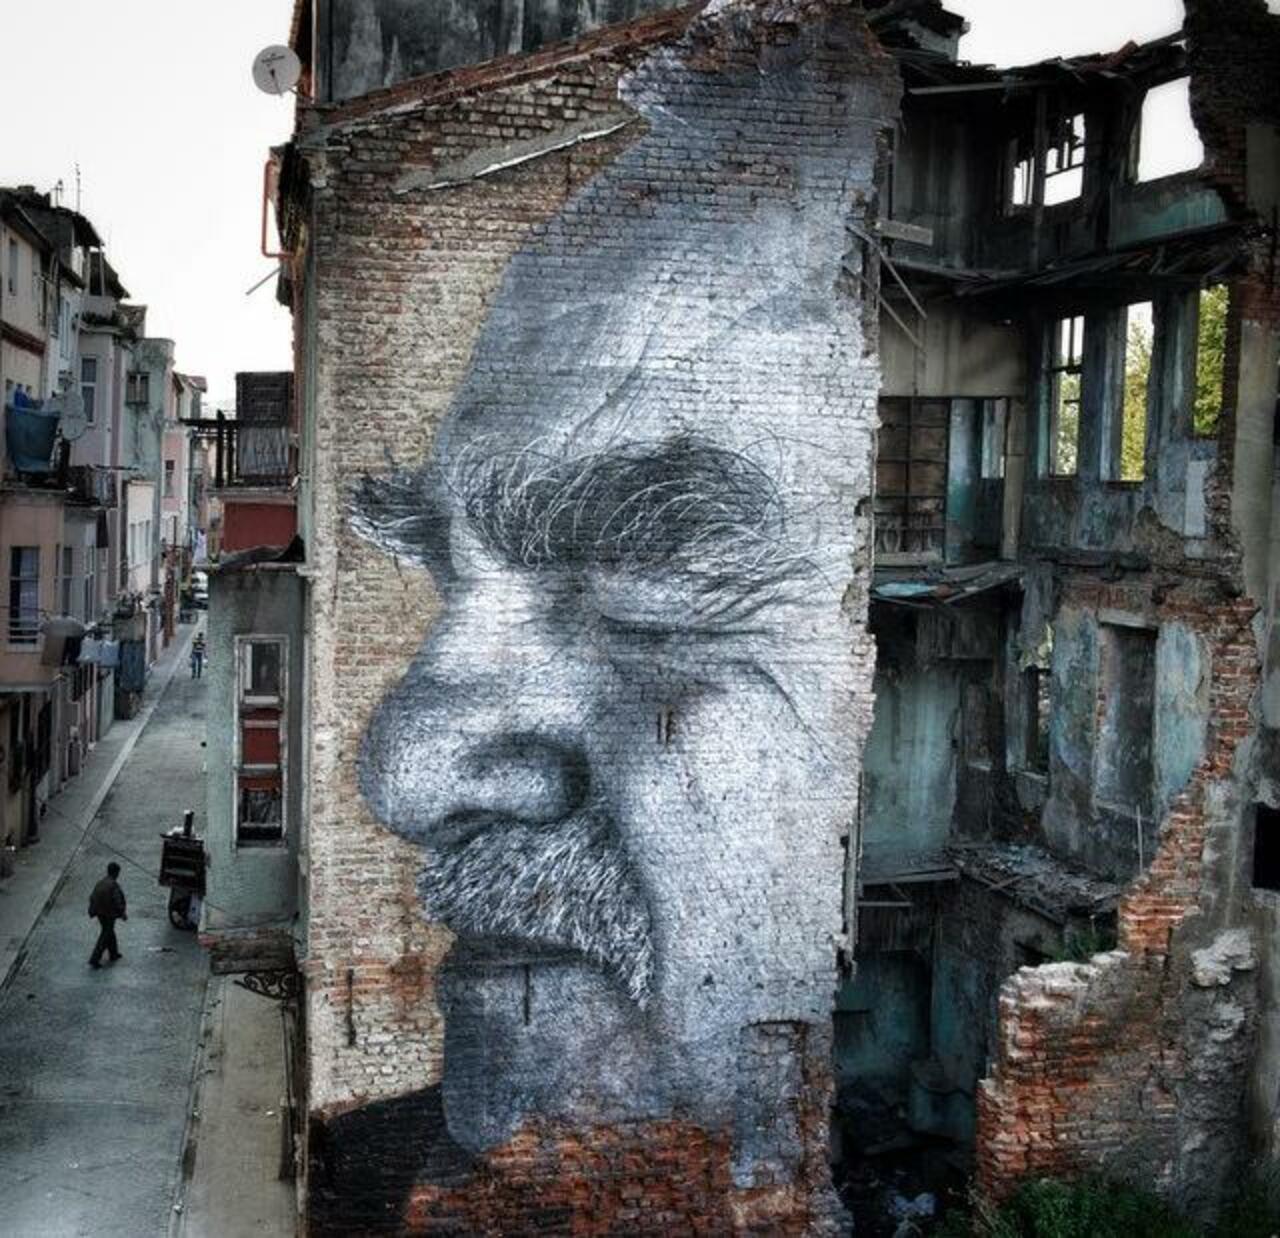 Street Art by JR in Istanbul & after local police painted over it 

#art #arte #graffiti #streetart http://t.co/8j16qAljU1